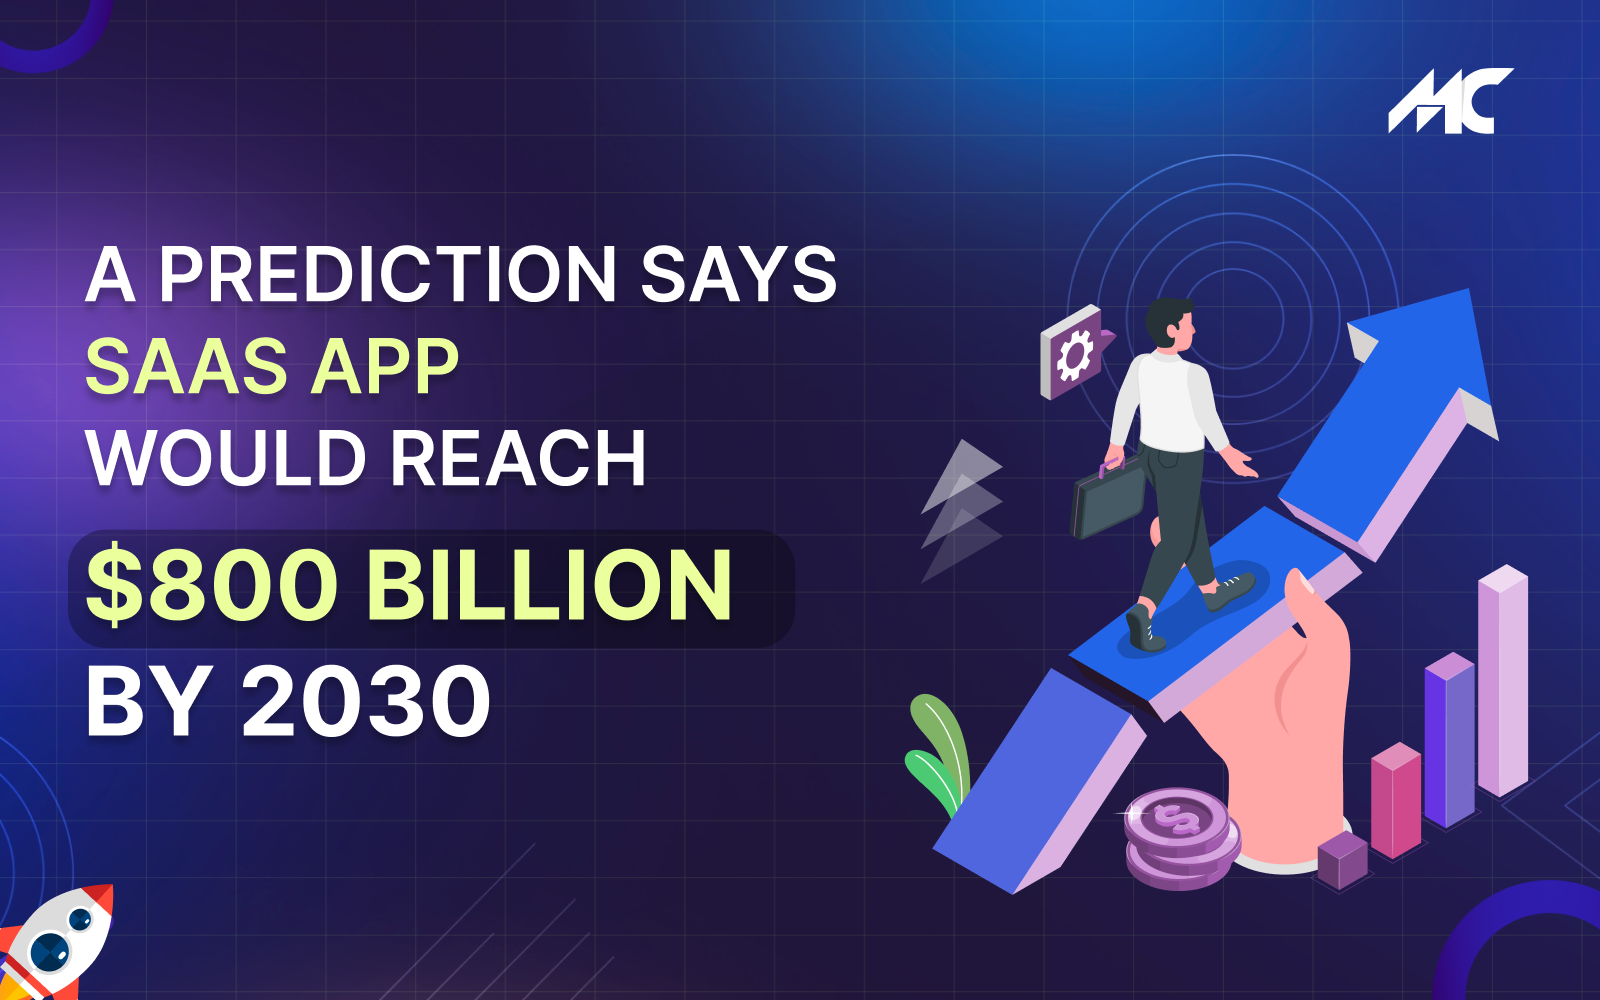 <img src="A prediction says SaaS App would reach $800 billion by 2030.png" alt="A prediction says SaaS App would reach $800 billion by 2030">